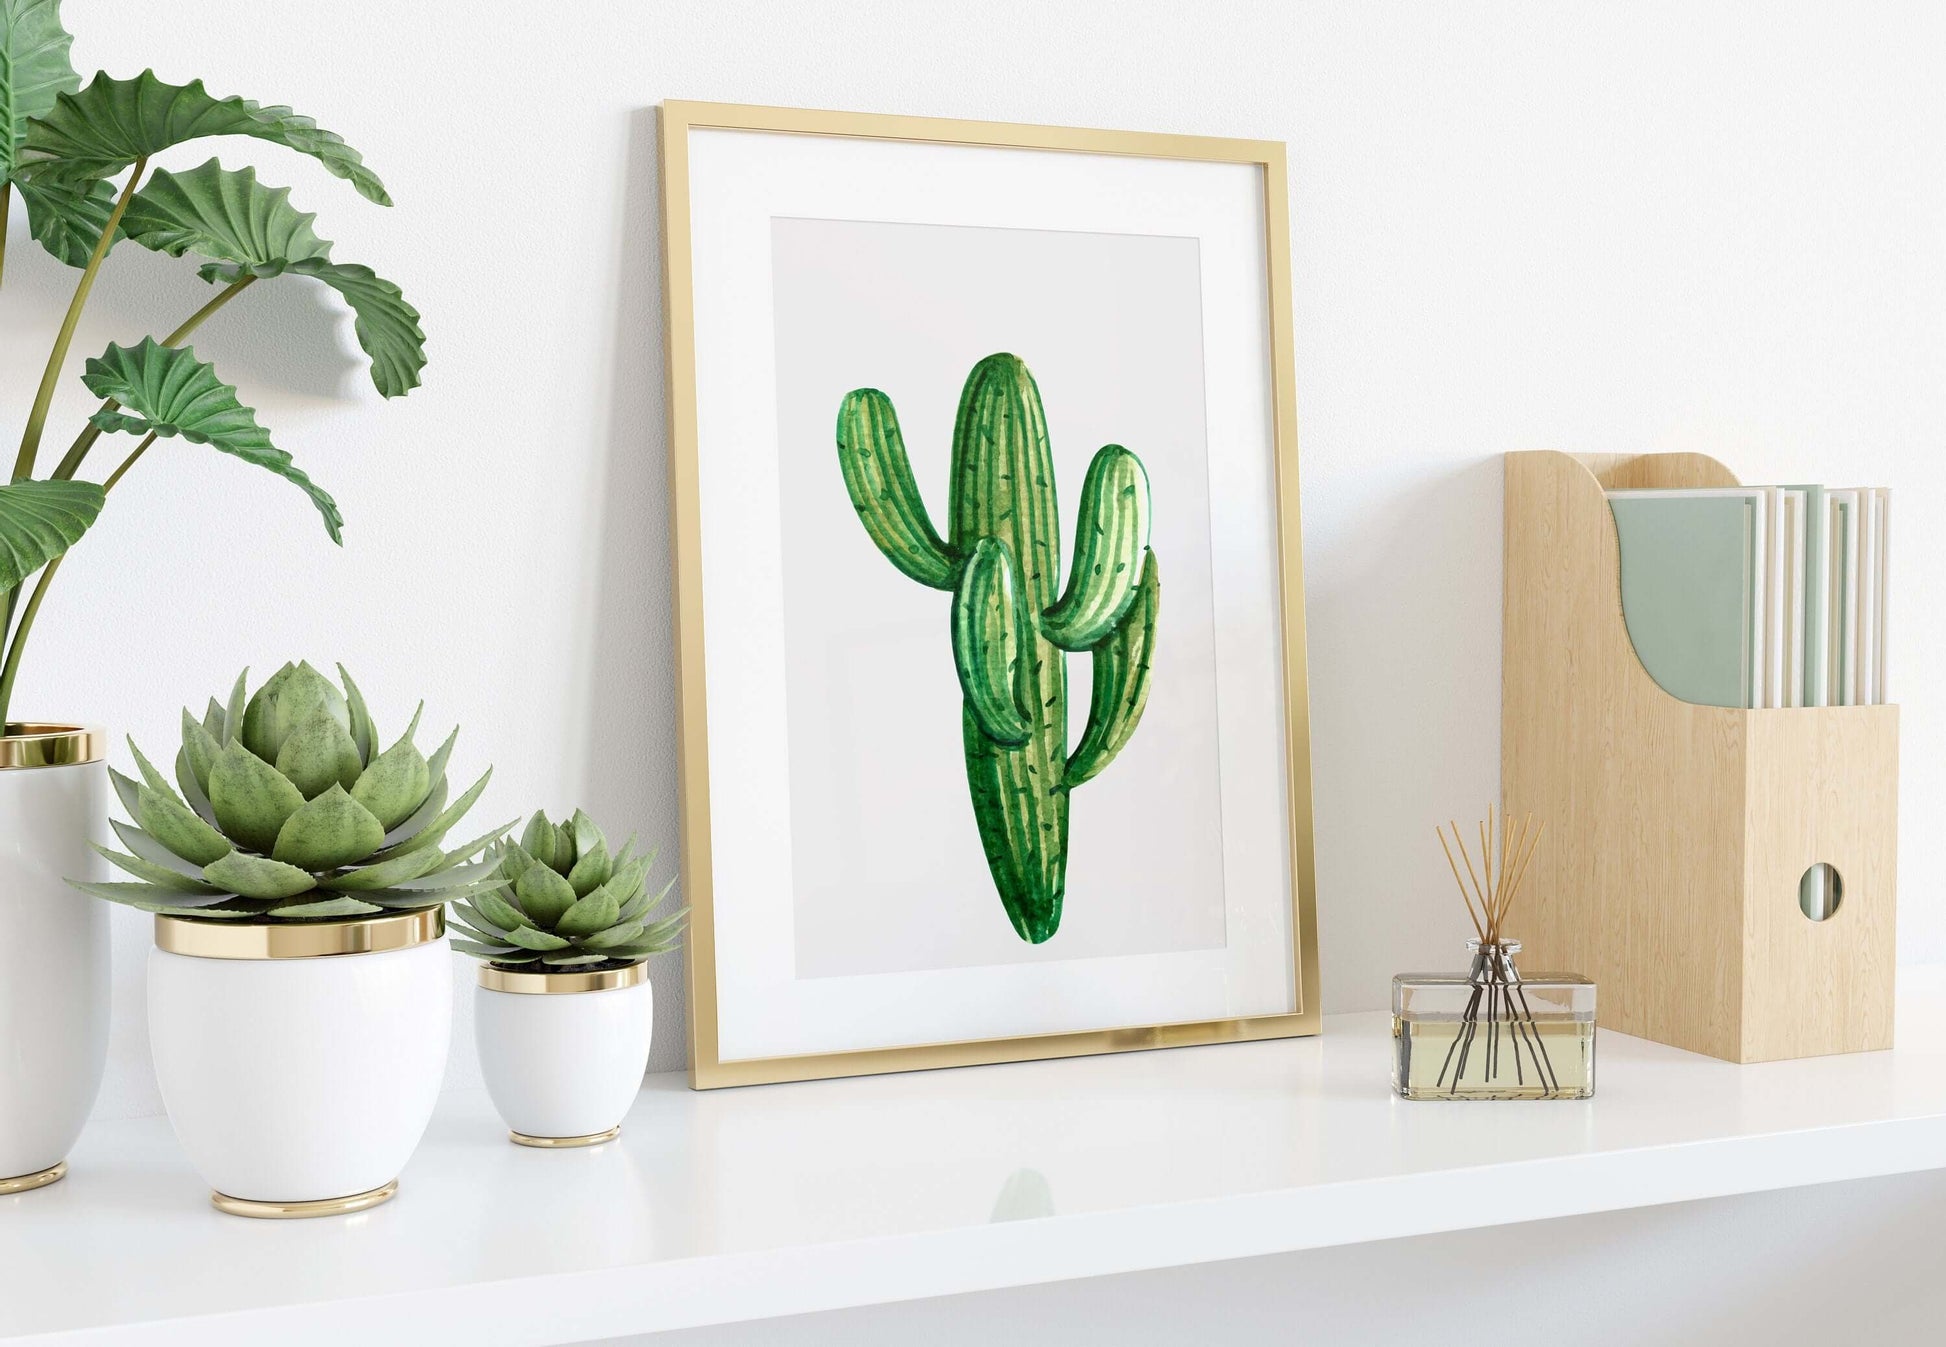 Cactus Print, Wall Art, Home Decor, Bathroom Decor, Botanical Illustration, Tropical, Leaf Print, Bathroom Prints, Home Prints